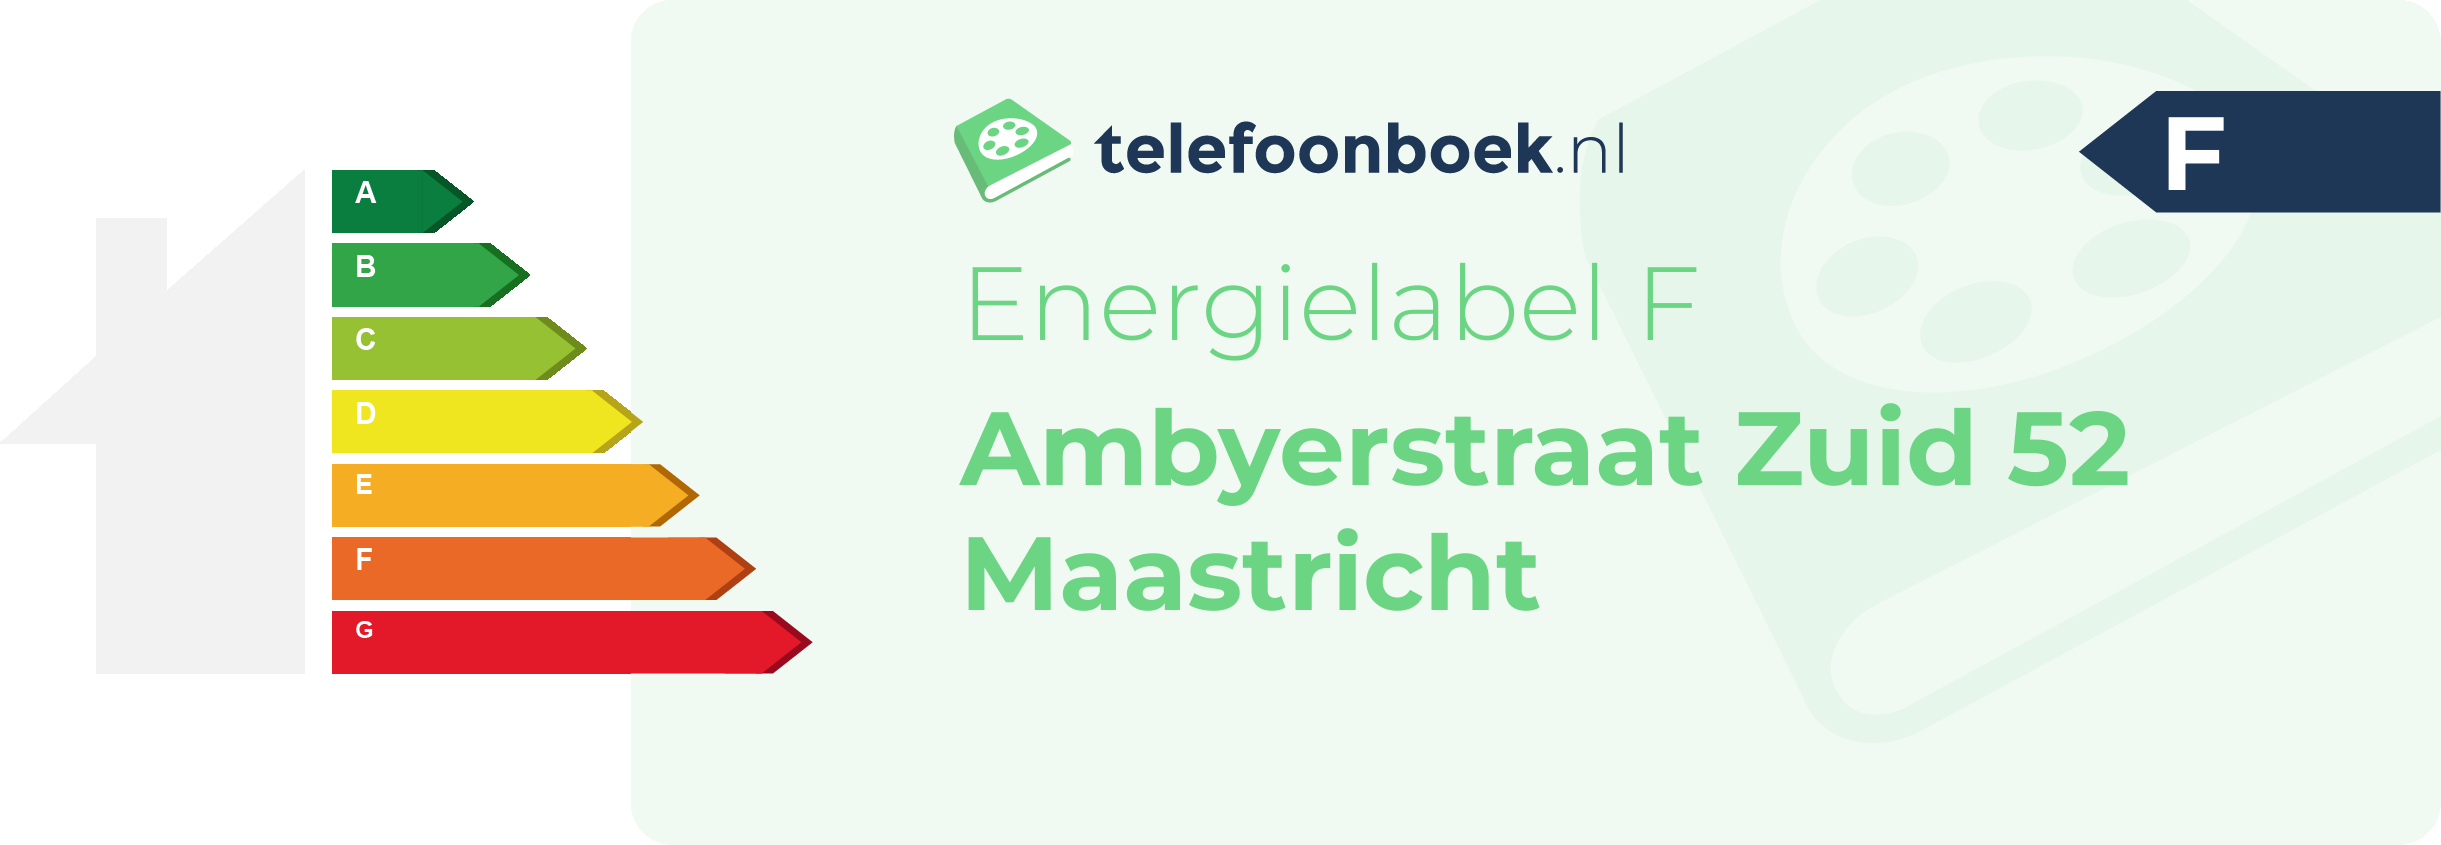 Energielabel Ambyerstraat Zuid 52 Maastricht